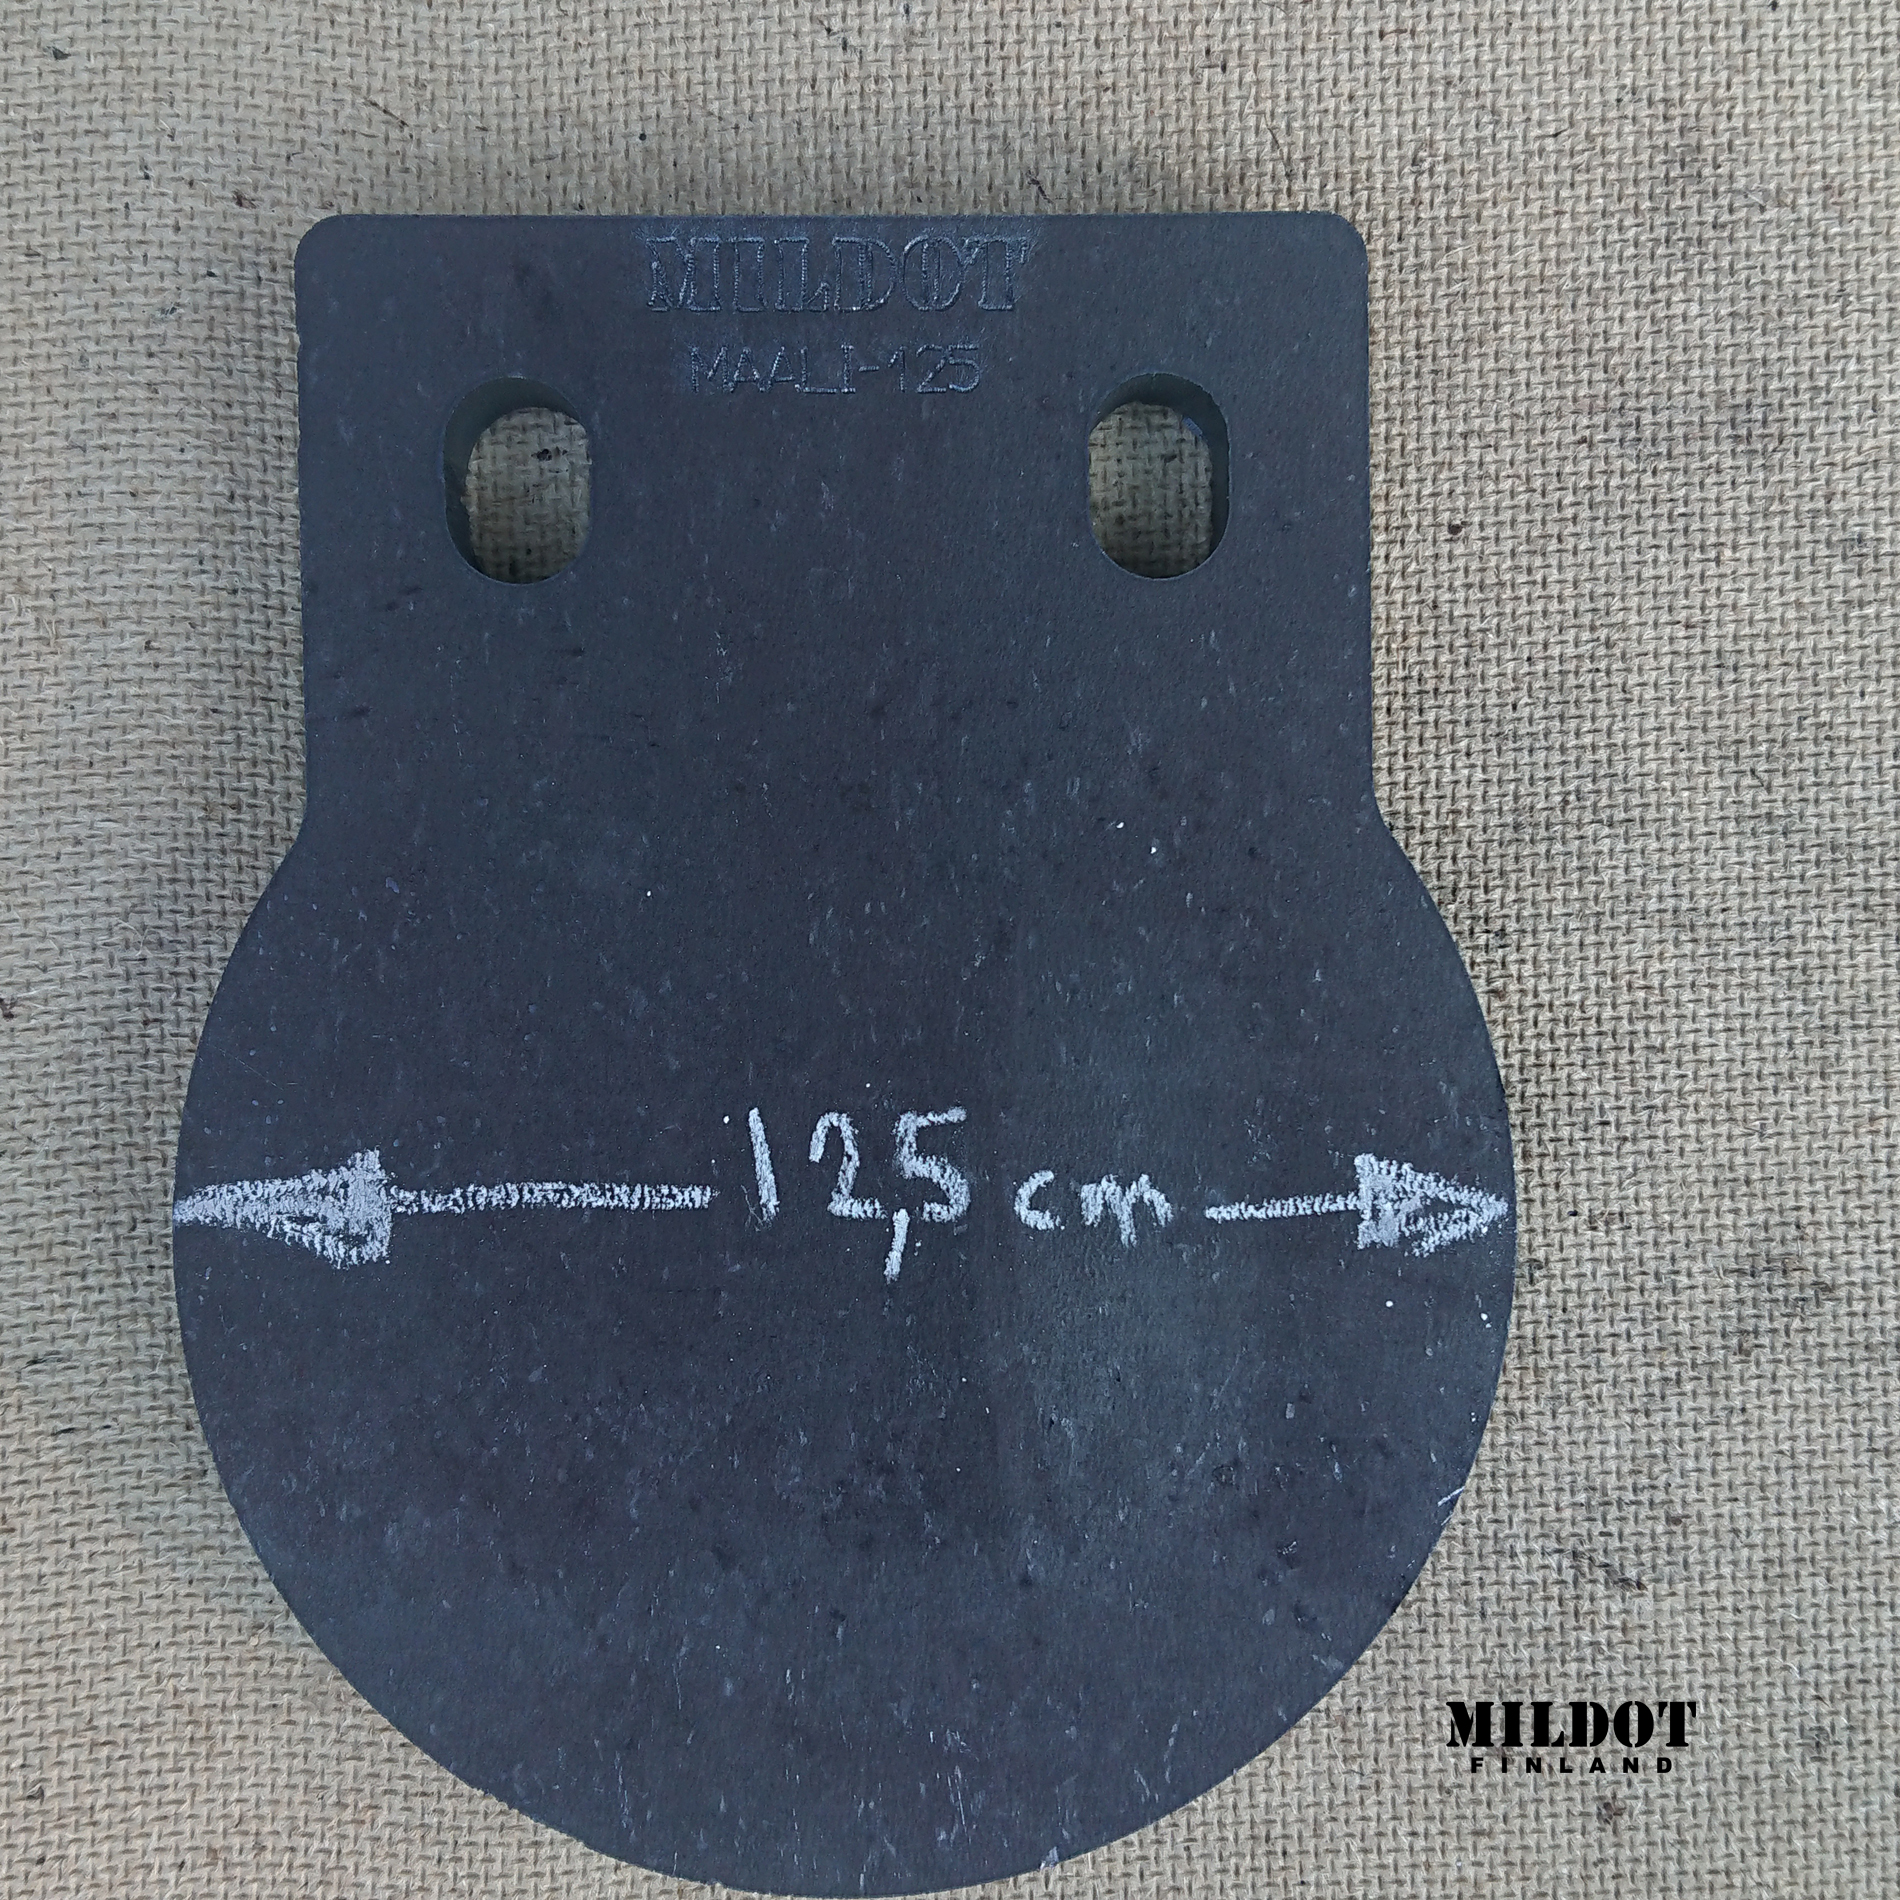 Metallimaalitaulu 12,5cm – 12mm – MILDOT